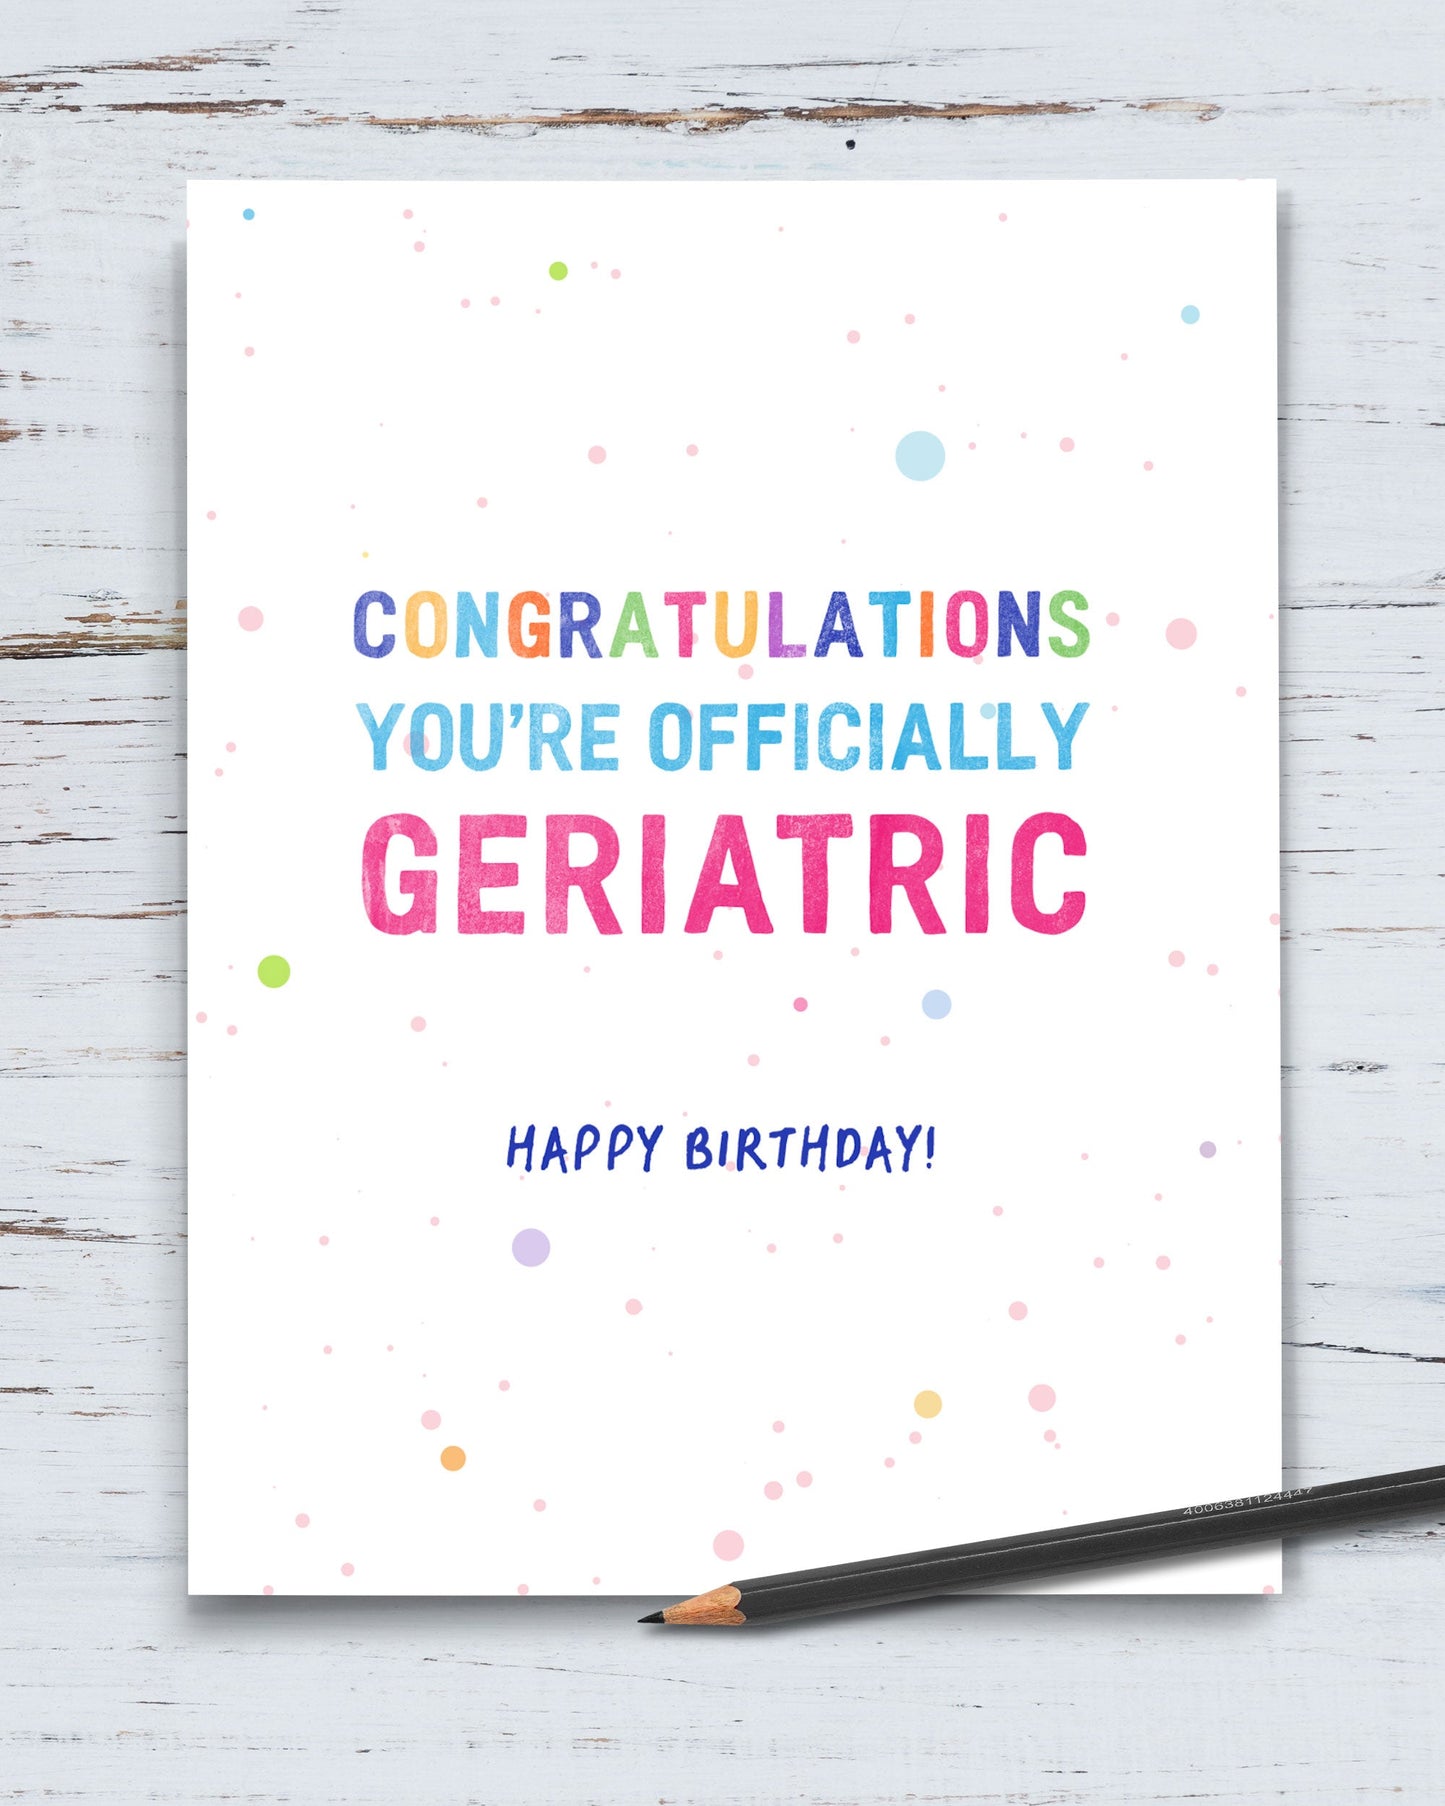 Officially Geriatric humorous Birthday Card - Transit Design - Smirkantile